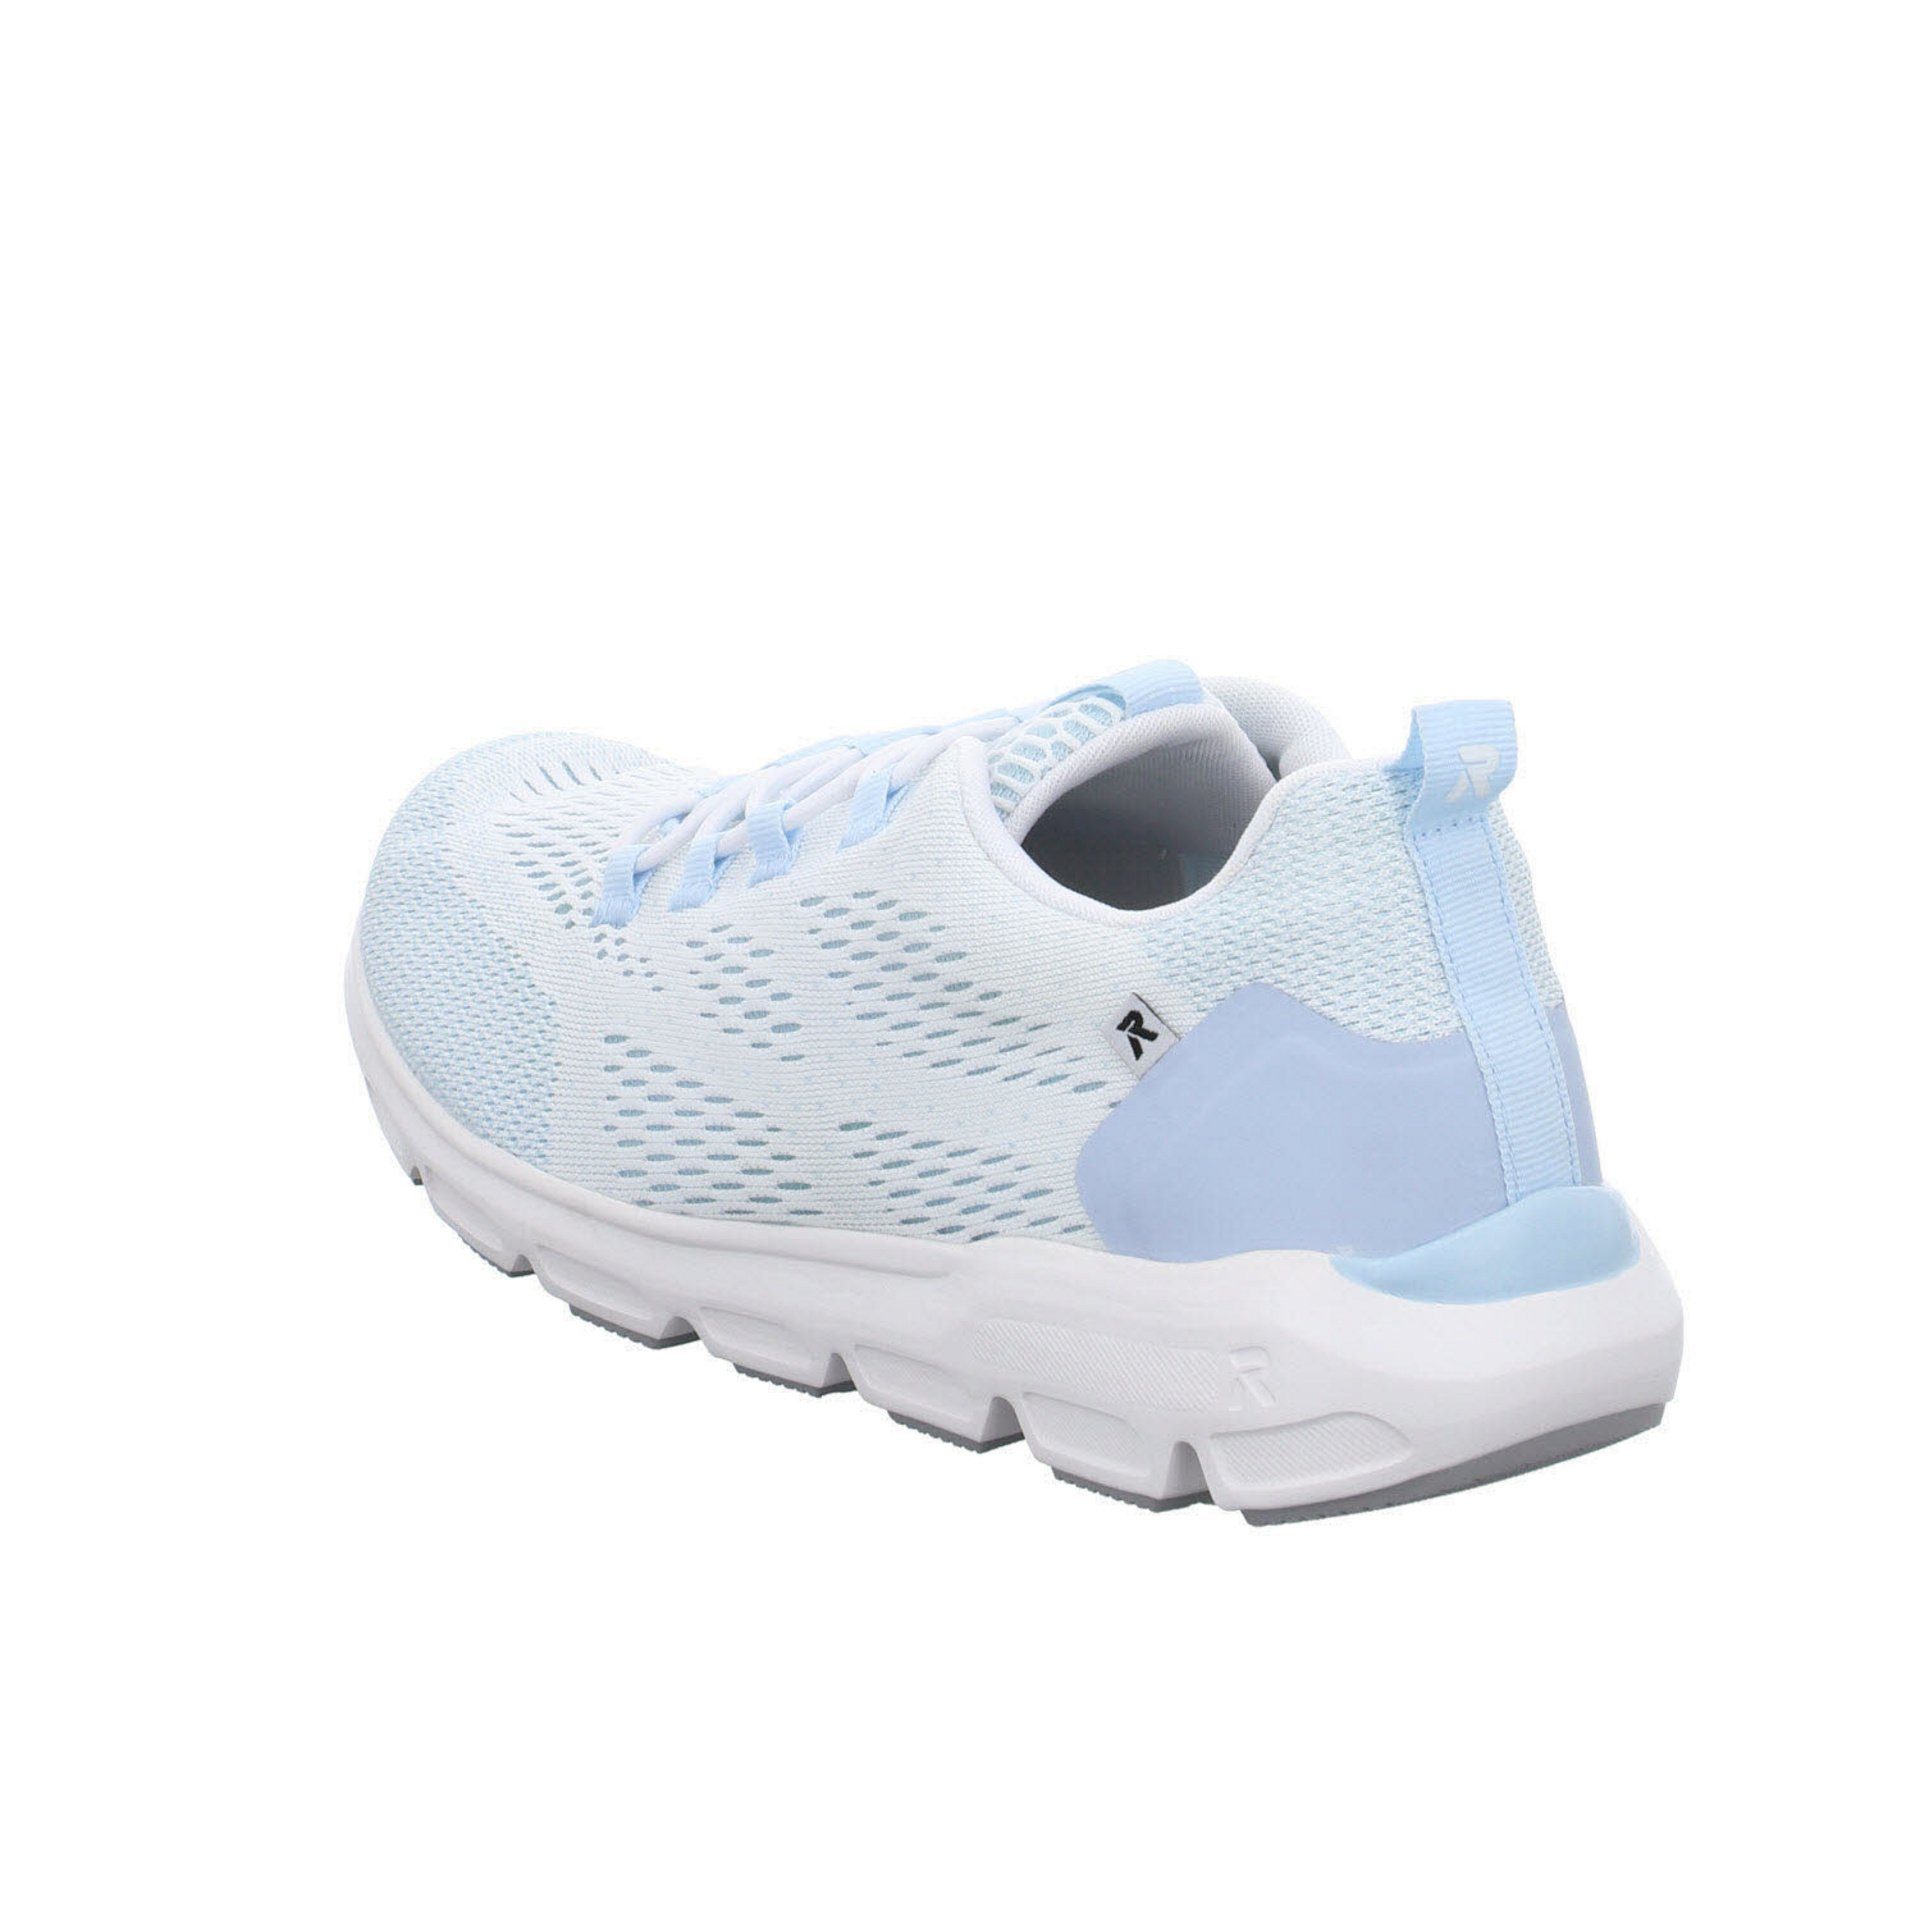 sportweiss-ciel/ciel Slip-On Rieker R-Evolution Textil Schuhe Sneaker Slipper Sneaker Damen